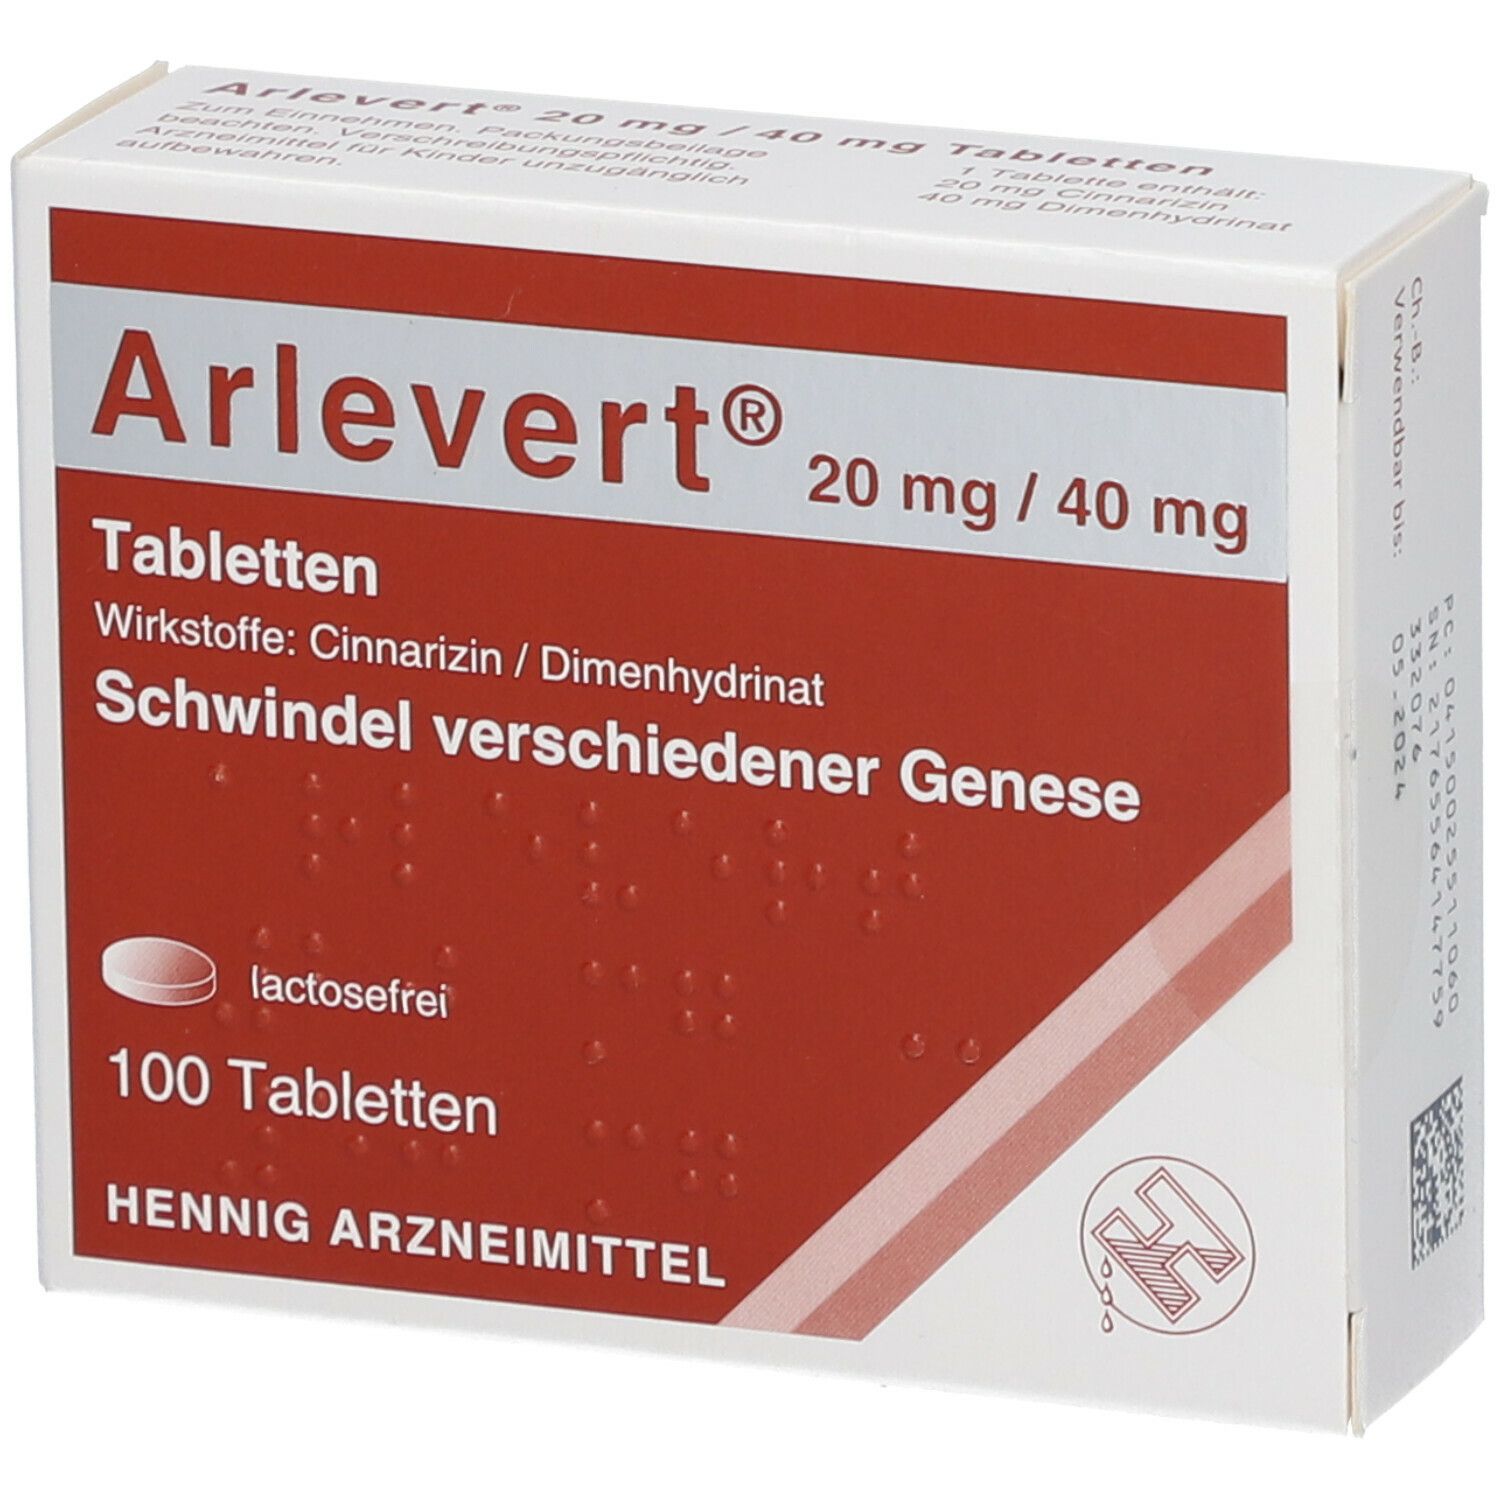 Arlevert® 20 mg/40 mg